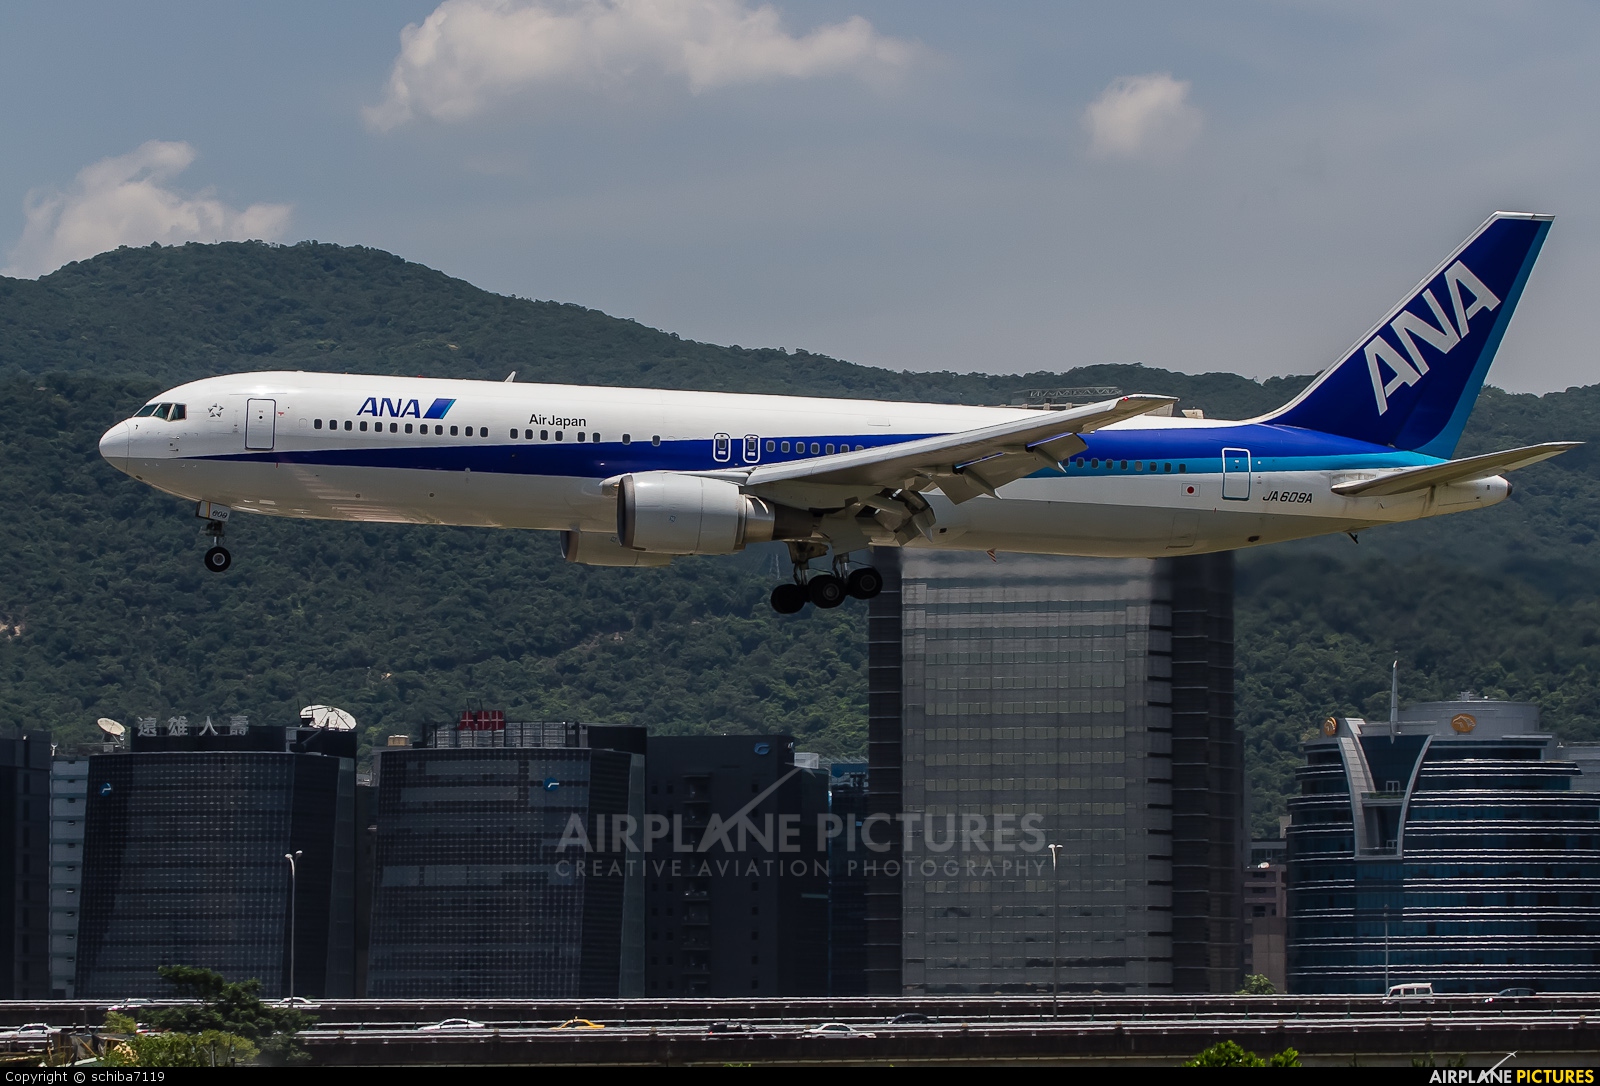 ANA - All Nippon Airways JA609A aircraft at Taipei Sung Shan/Songshan Airport